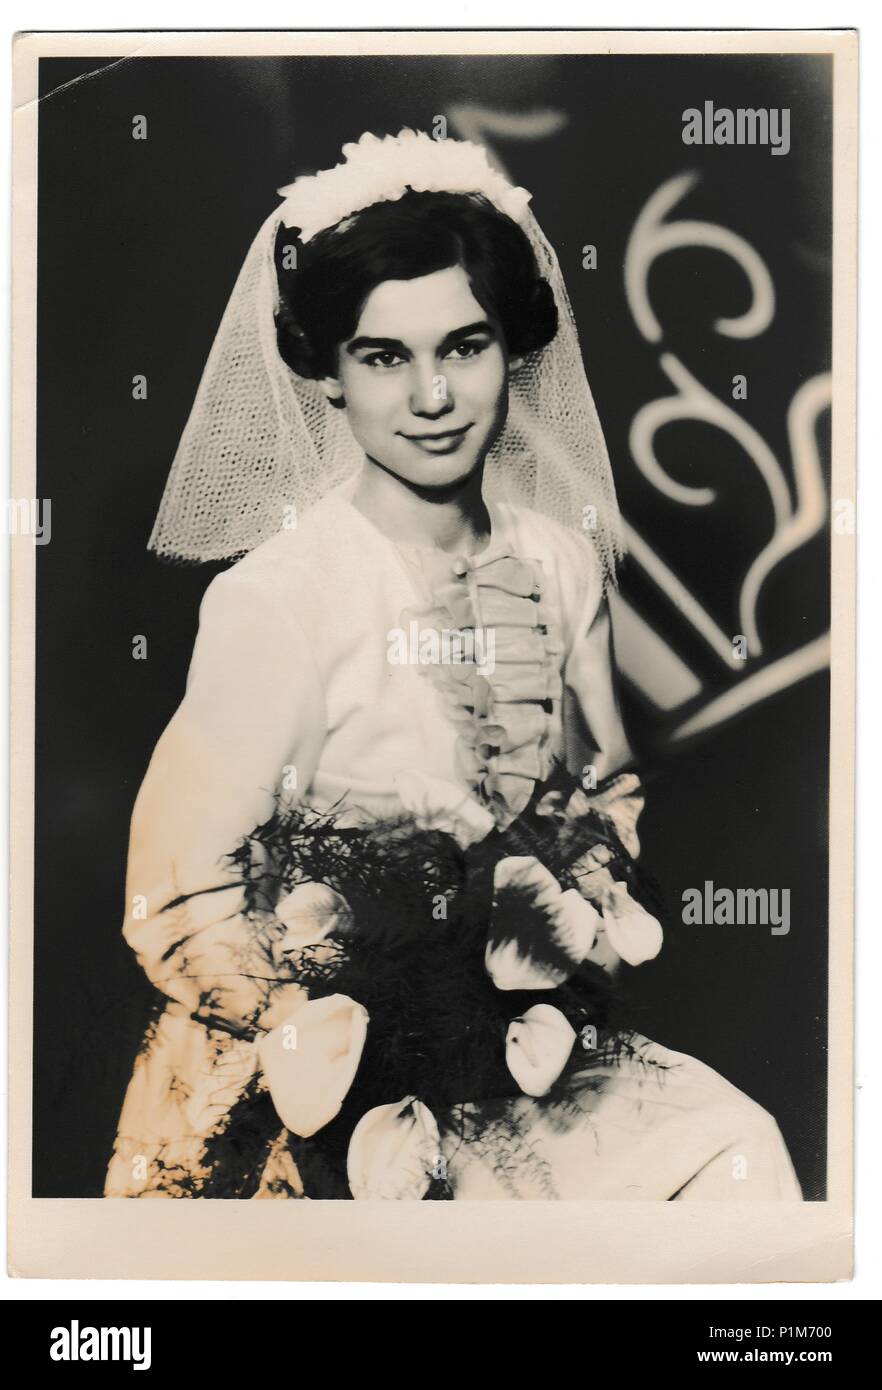 THE CZECHOSLOVAK SOCIALIST REPUBLIC - APRIL 4, 1964: Retro photo shows bride with white kala flowers. Black & white vintage photography. Stock Photo